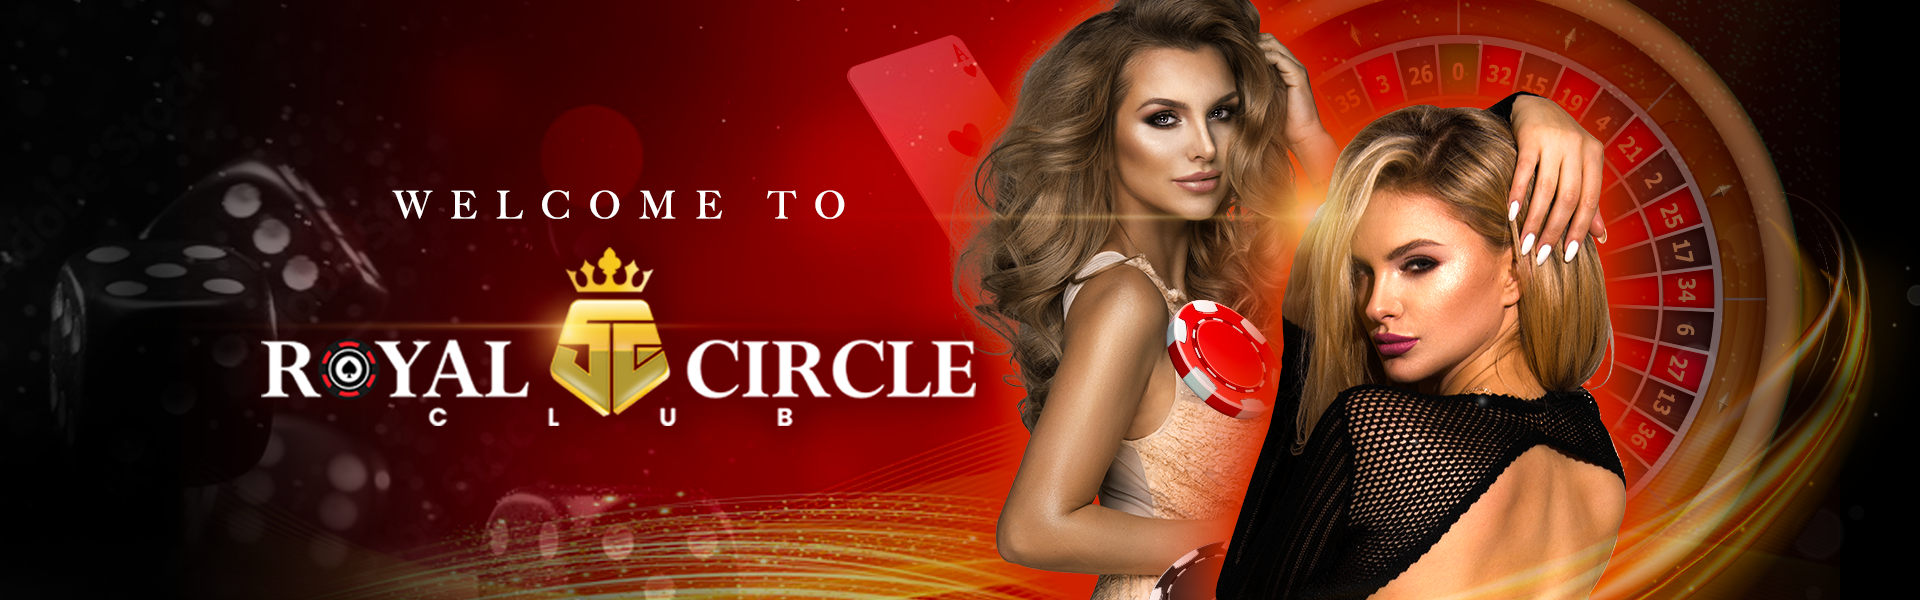 Royal Circle Club - Welcome 1 - royalcc1.com